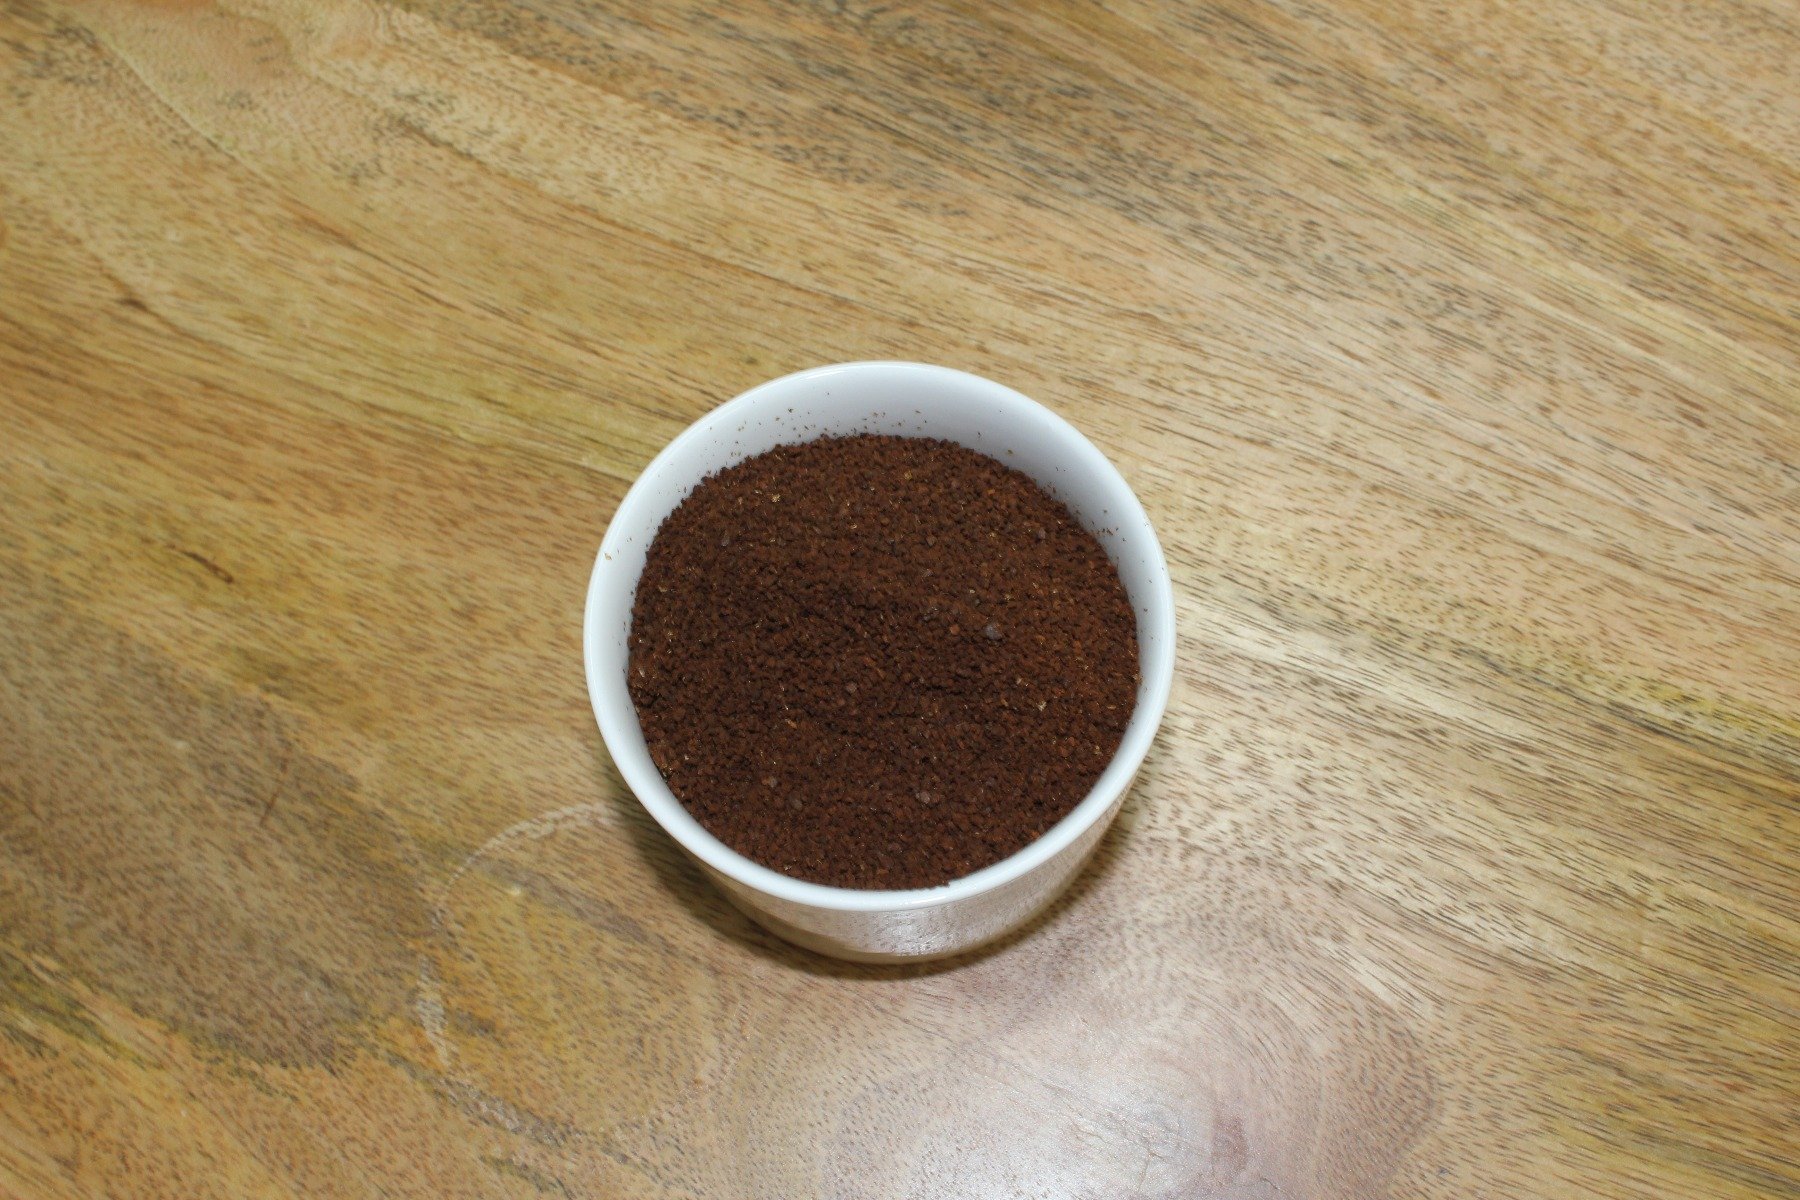 grind, ground coffee, paper filter, bruer coffee